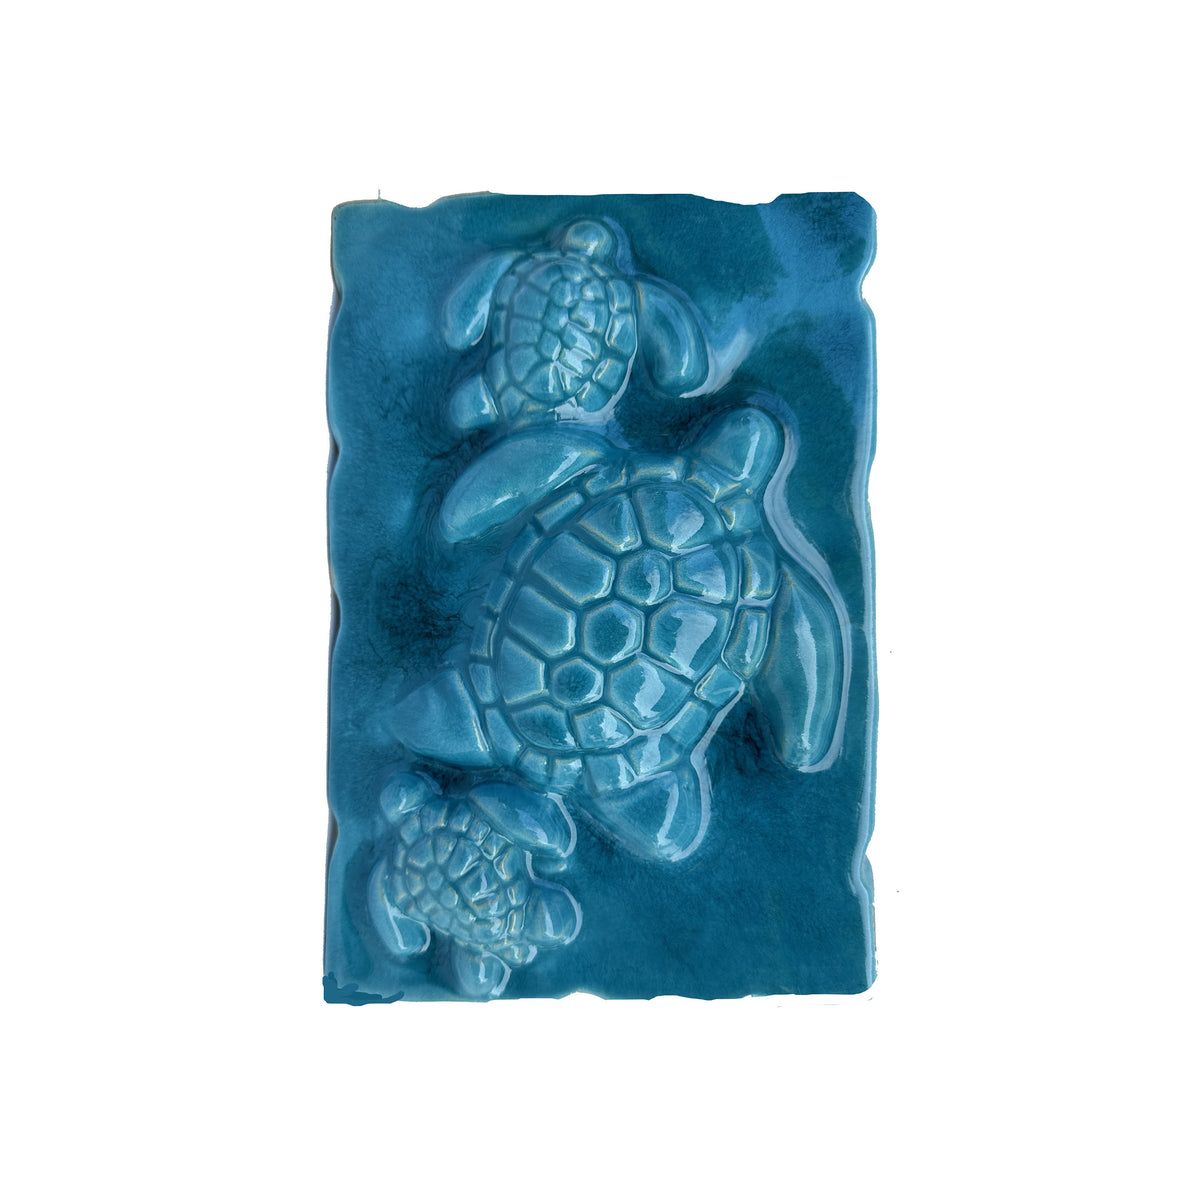 Maui Sea Turtle Ceramic Wall Art, beach house art decor, tropical Hawaiian art decor, bathroom design ideas,